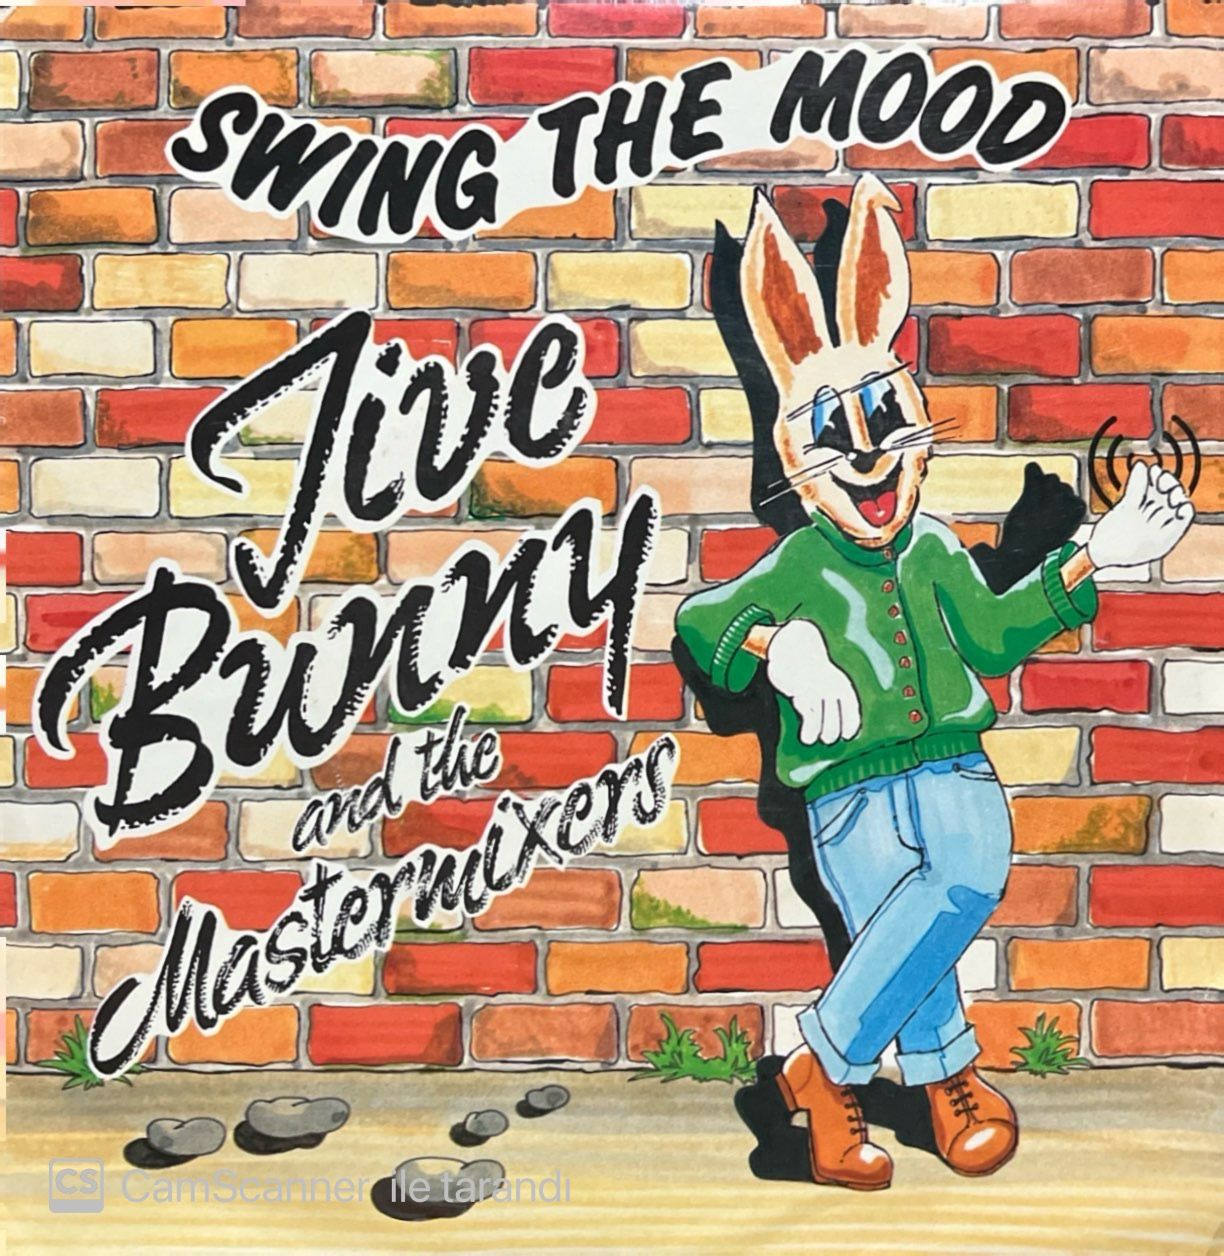 Jive Bunny And The Mastermixers Swing The Mood 45lik Plak